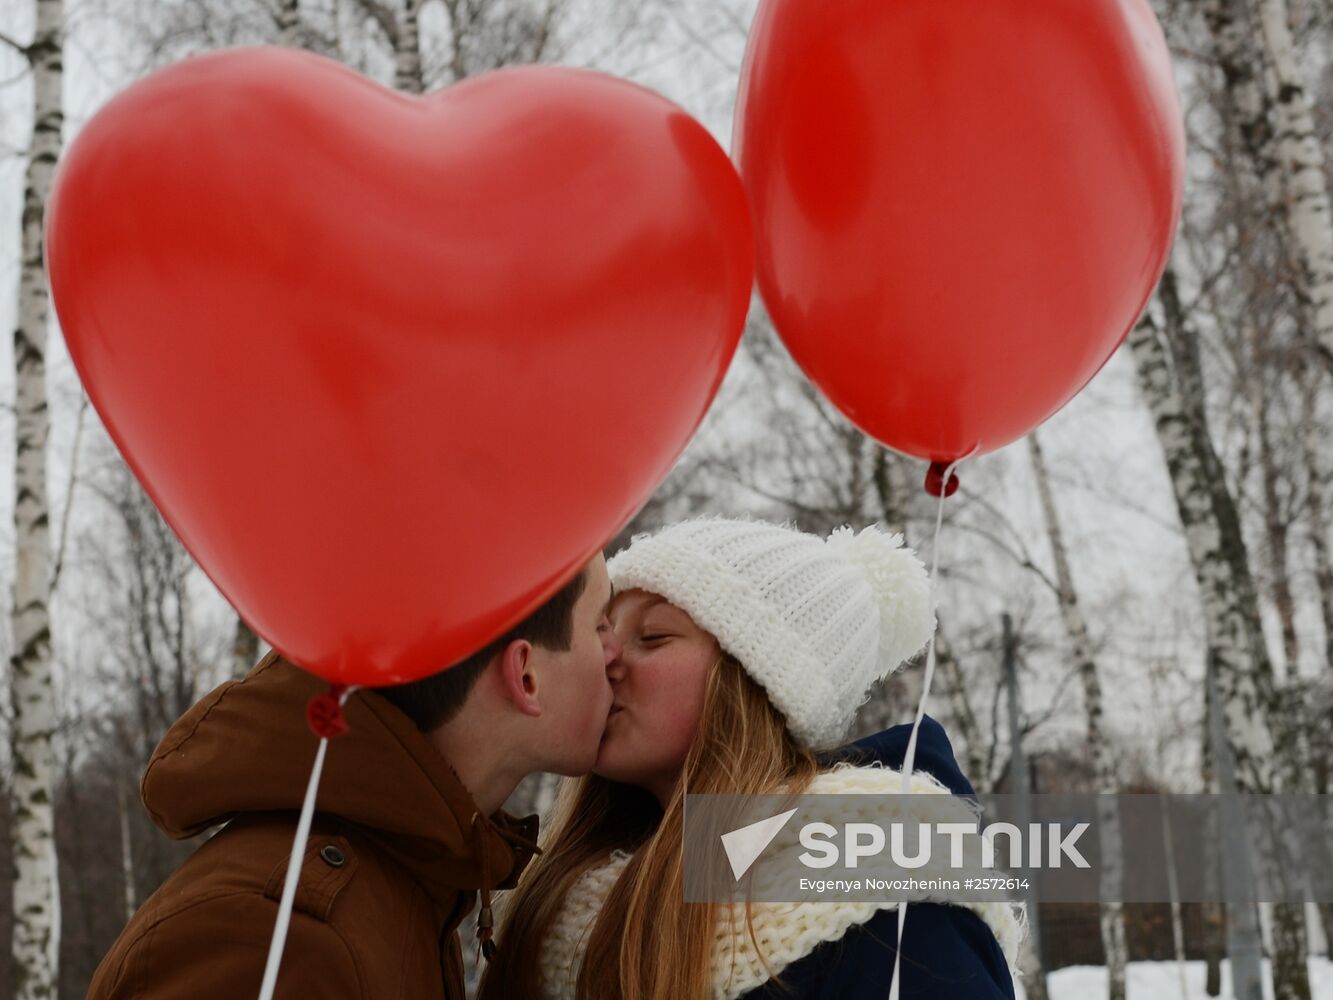 St. Valentine's Day celebrations